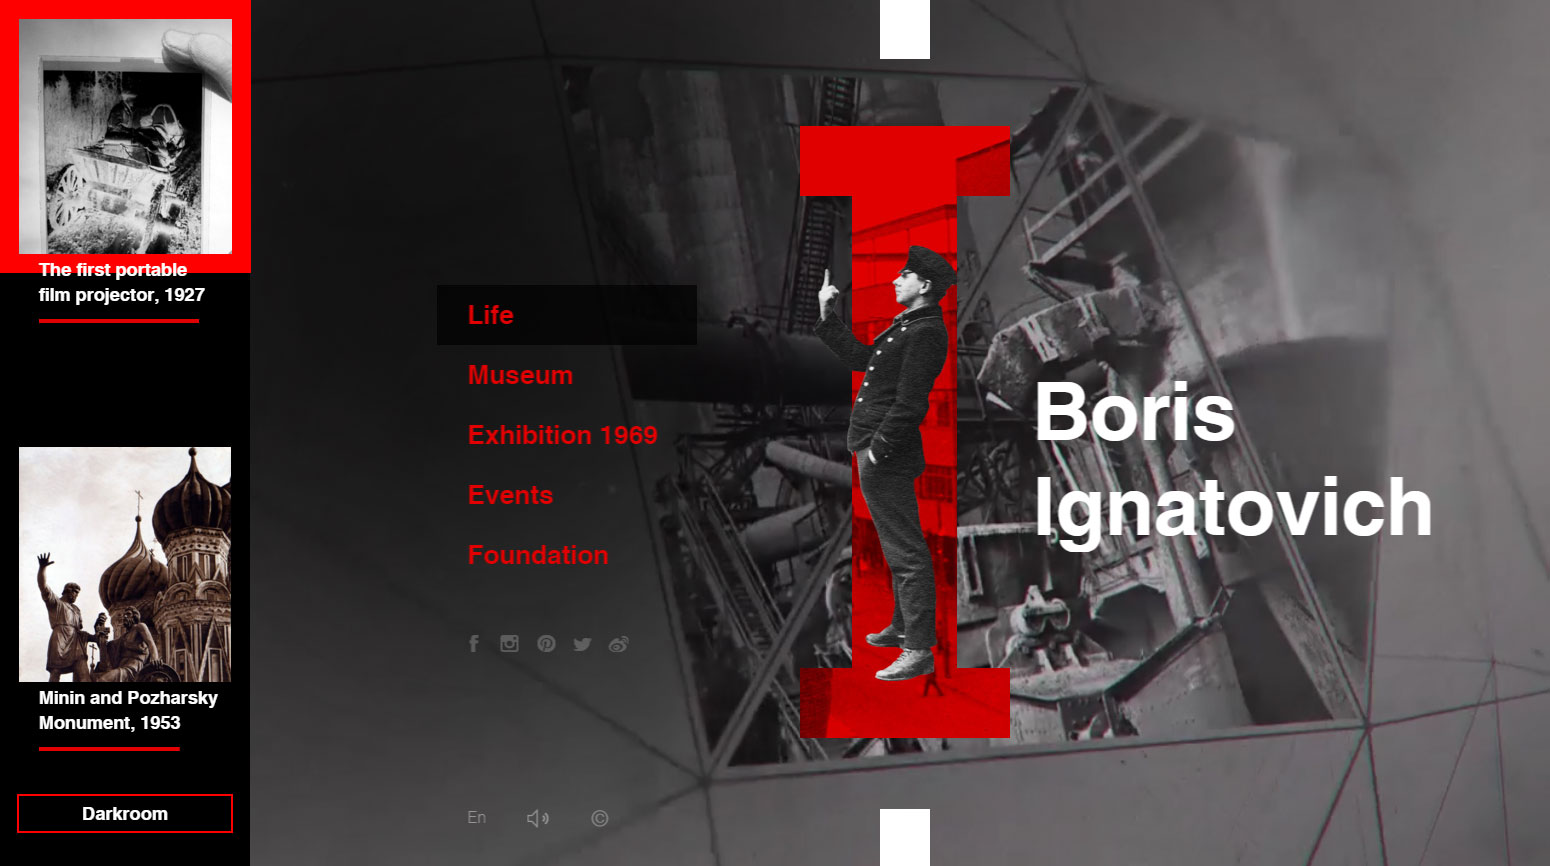 Innovator. Boris Ignatovich - Website of the Day